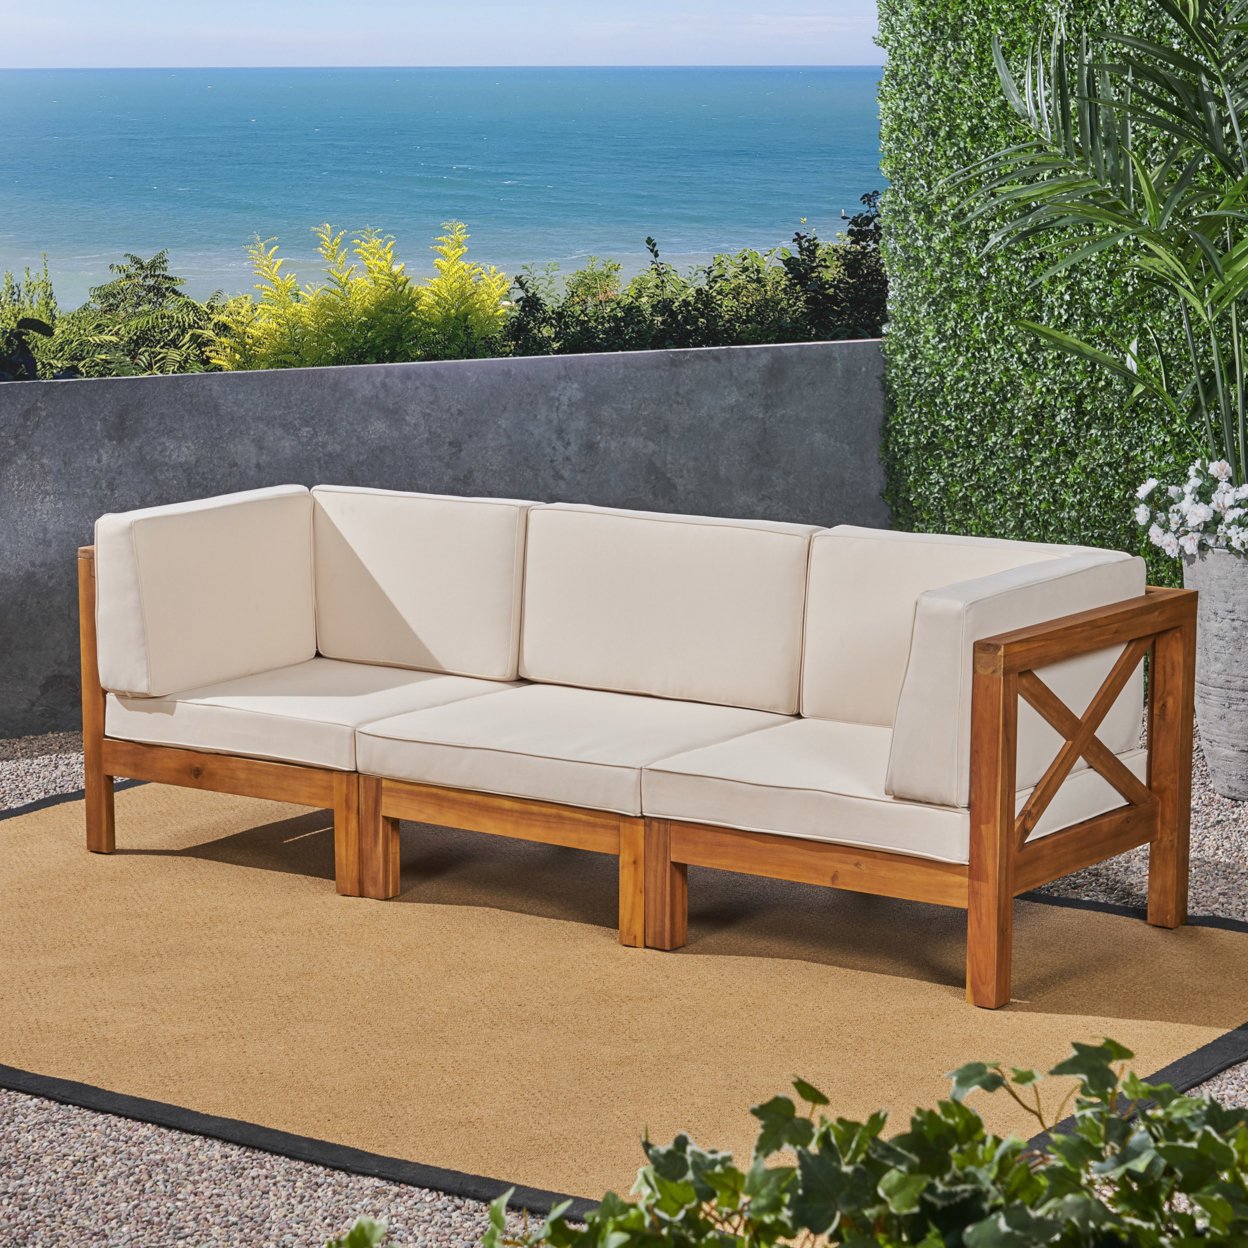 Brava Outdoor Modular Acacia Wood Sofa With Cushions - Teak Finish + Beige